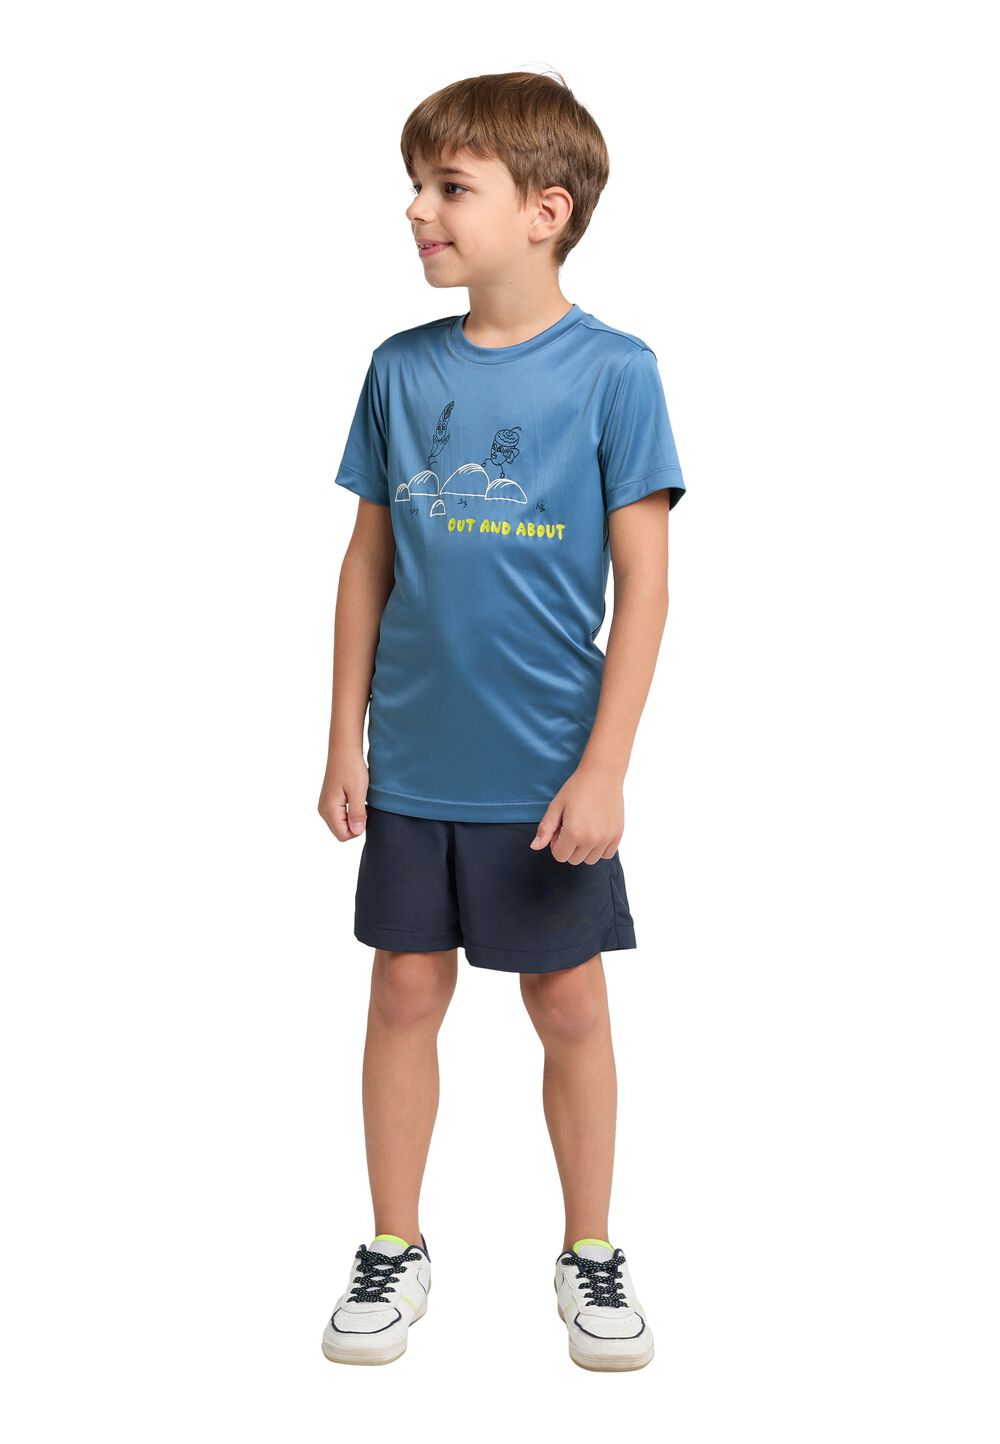 Jack Wolfskin OUT AND About T-Shirt Kids Functioneel shirt Kinderen 176 elemental blue elemental blue